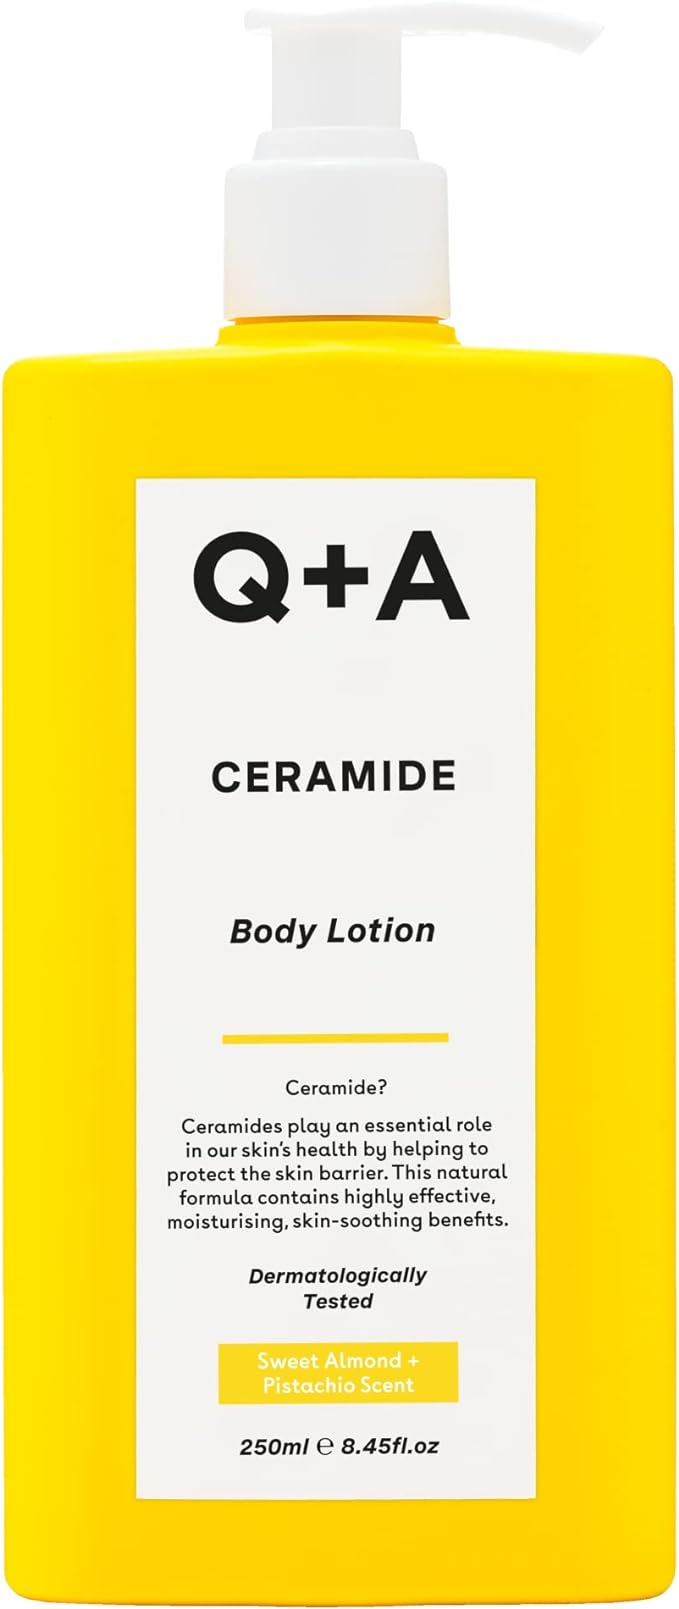 Q+A Ceramide Body Lotion 250ml Image